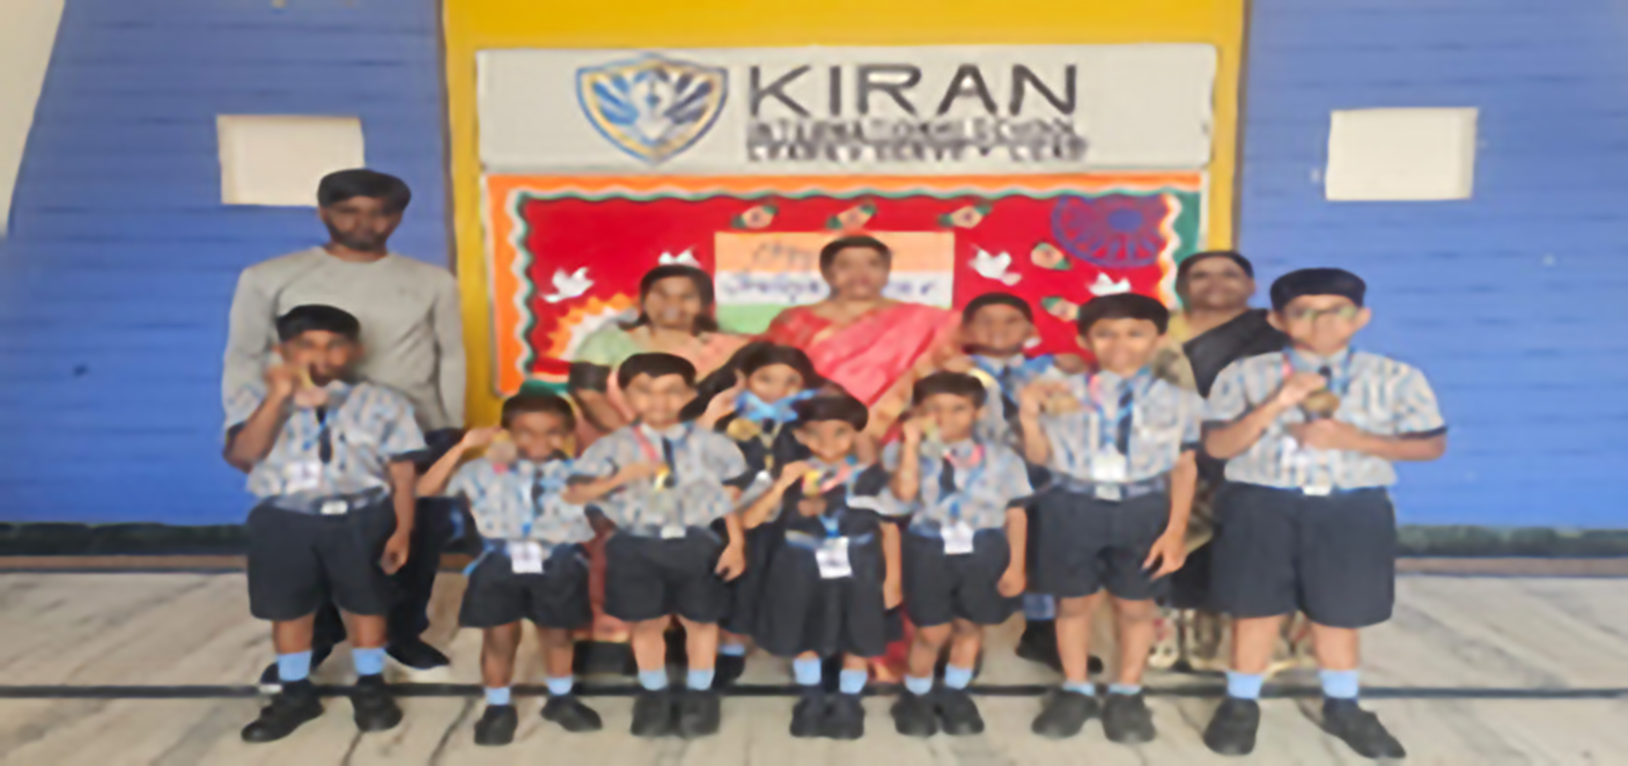 schools kids with medals